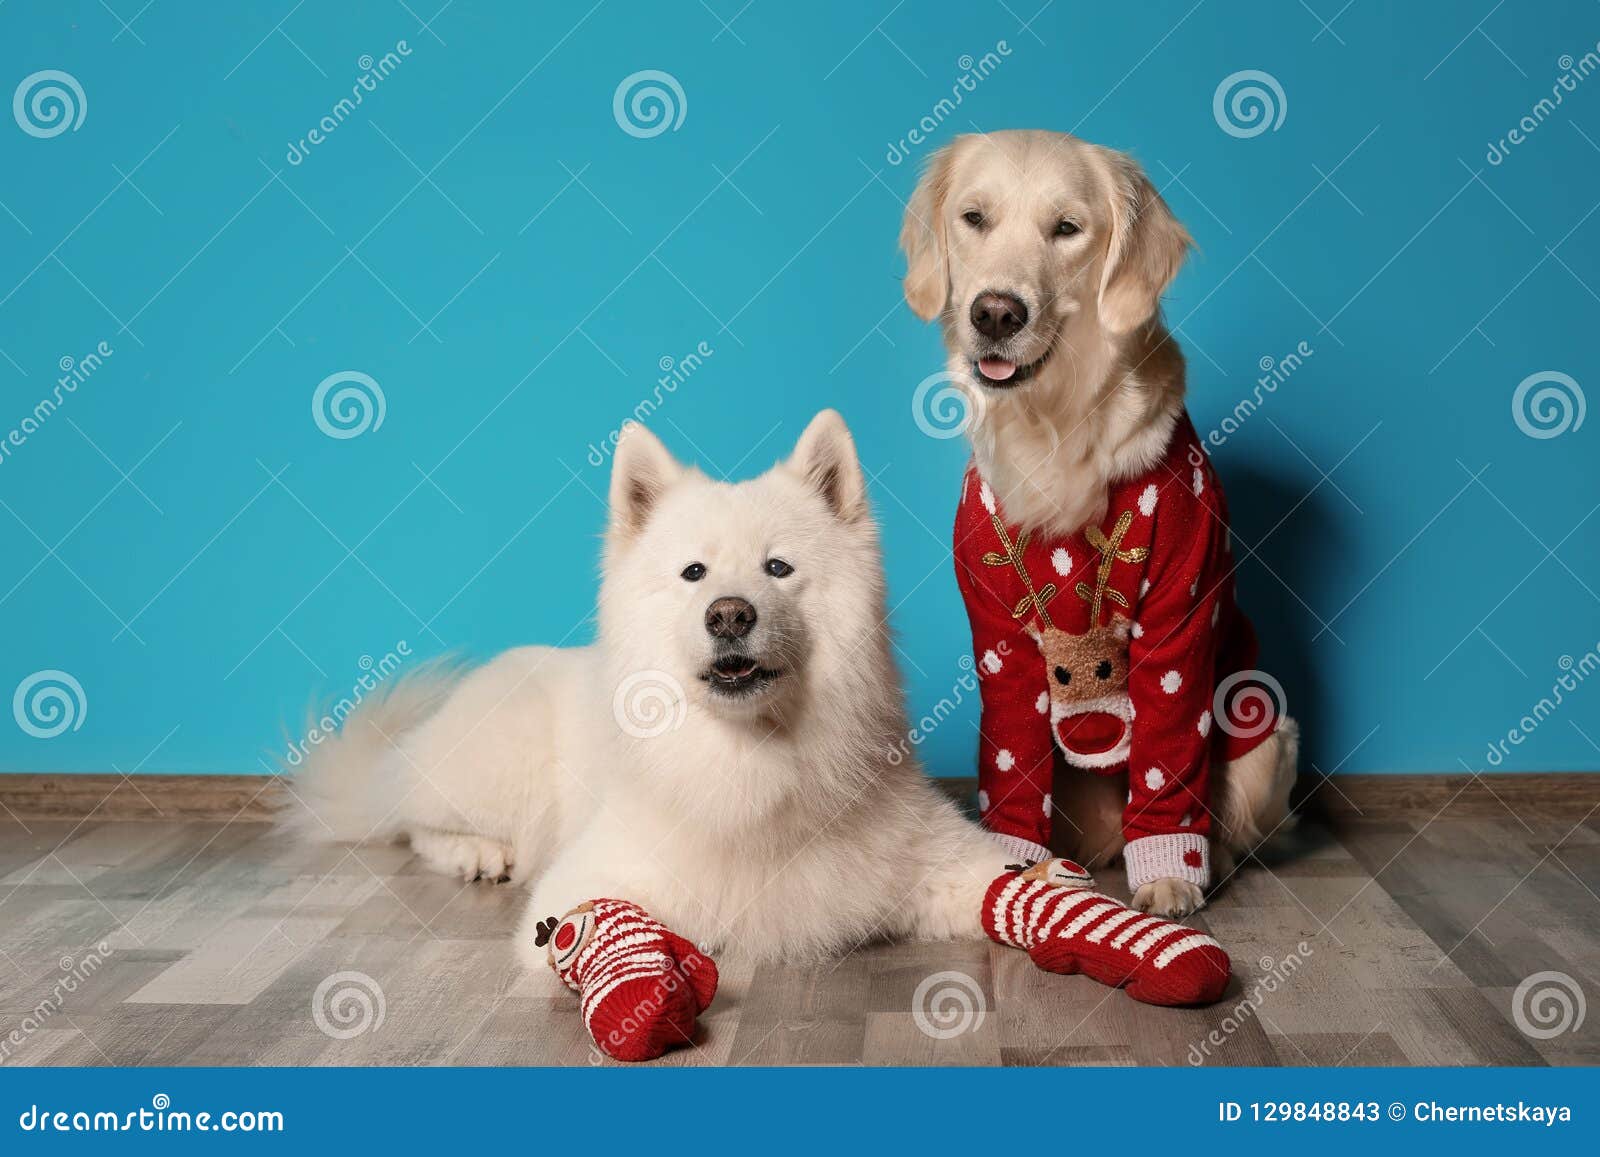 Cute Labrador Retriever in Christmas Sweater Stock Image - Image of ...